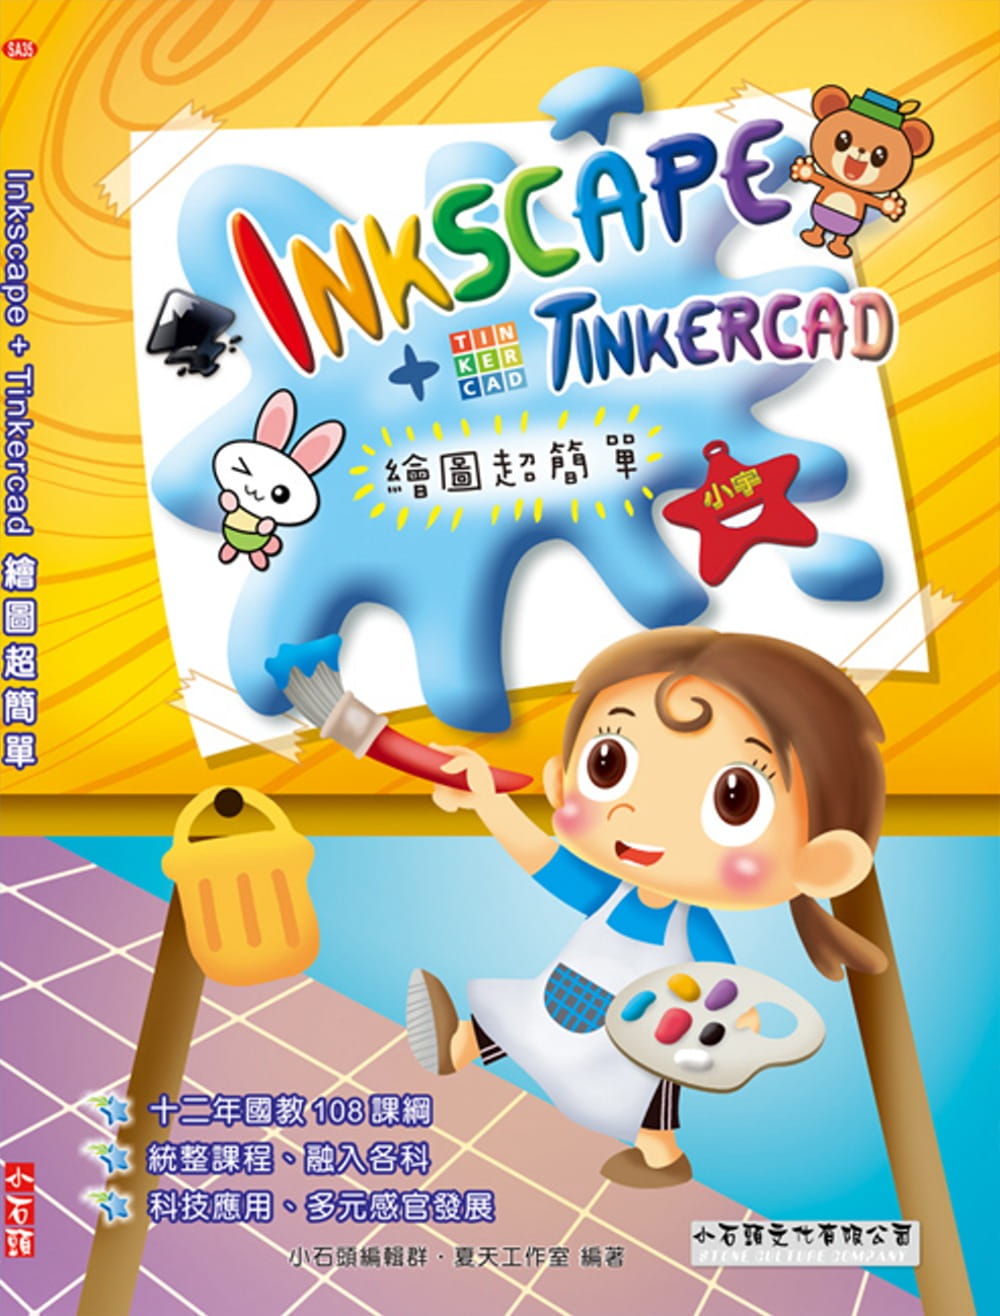 Inkscape+TinkerCad